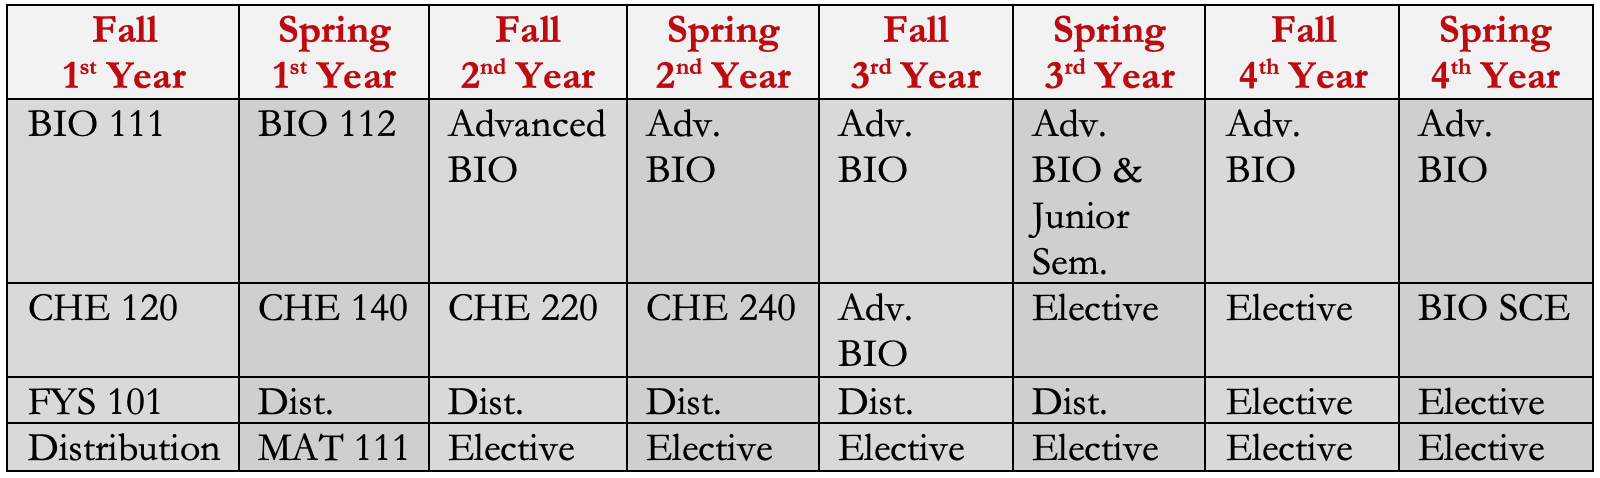 Biology Major Sample Schedule